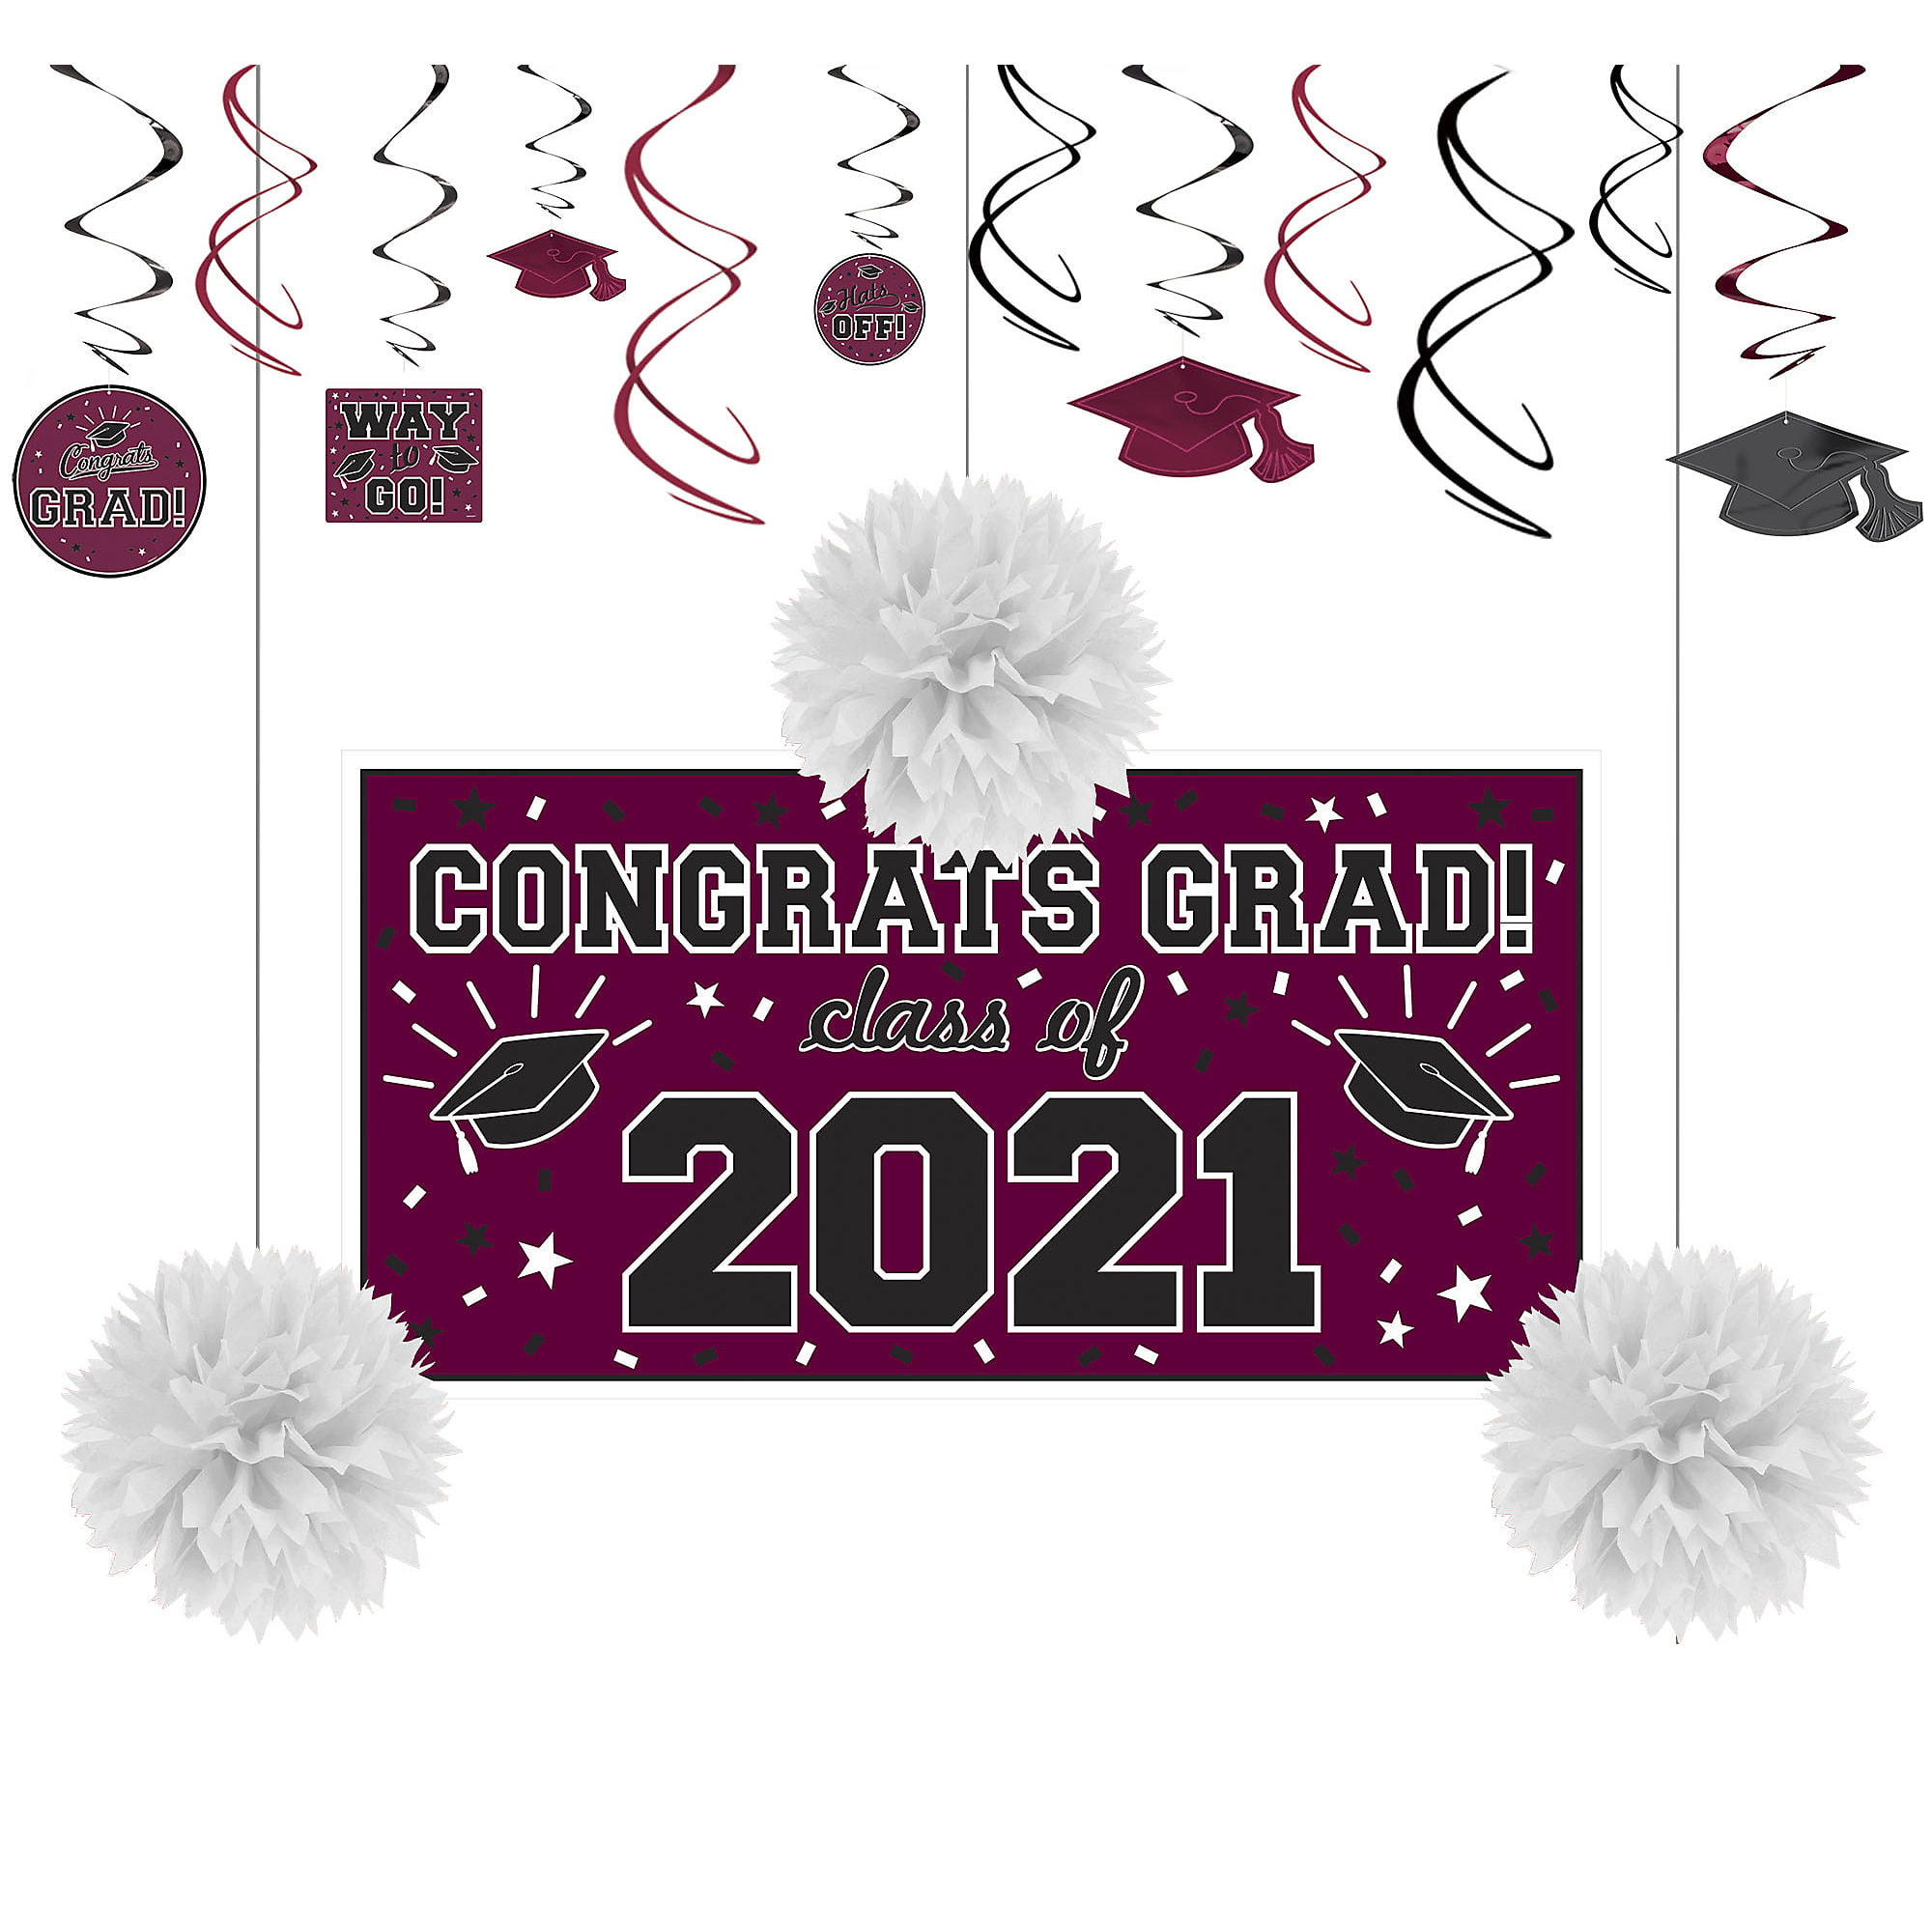 Details about   Graduation Banner 2021 Congrats Grad for Graduation Party Decoration Maroon New